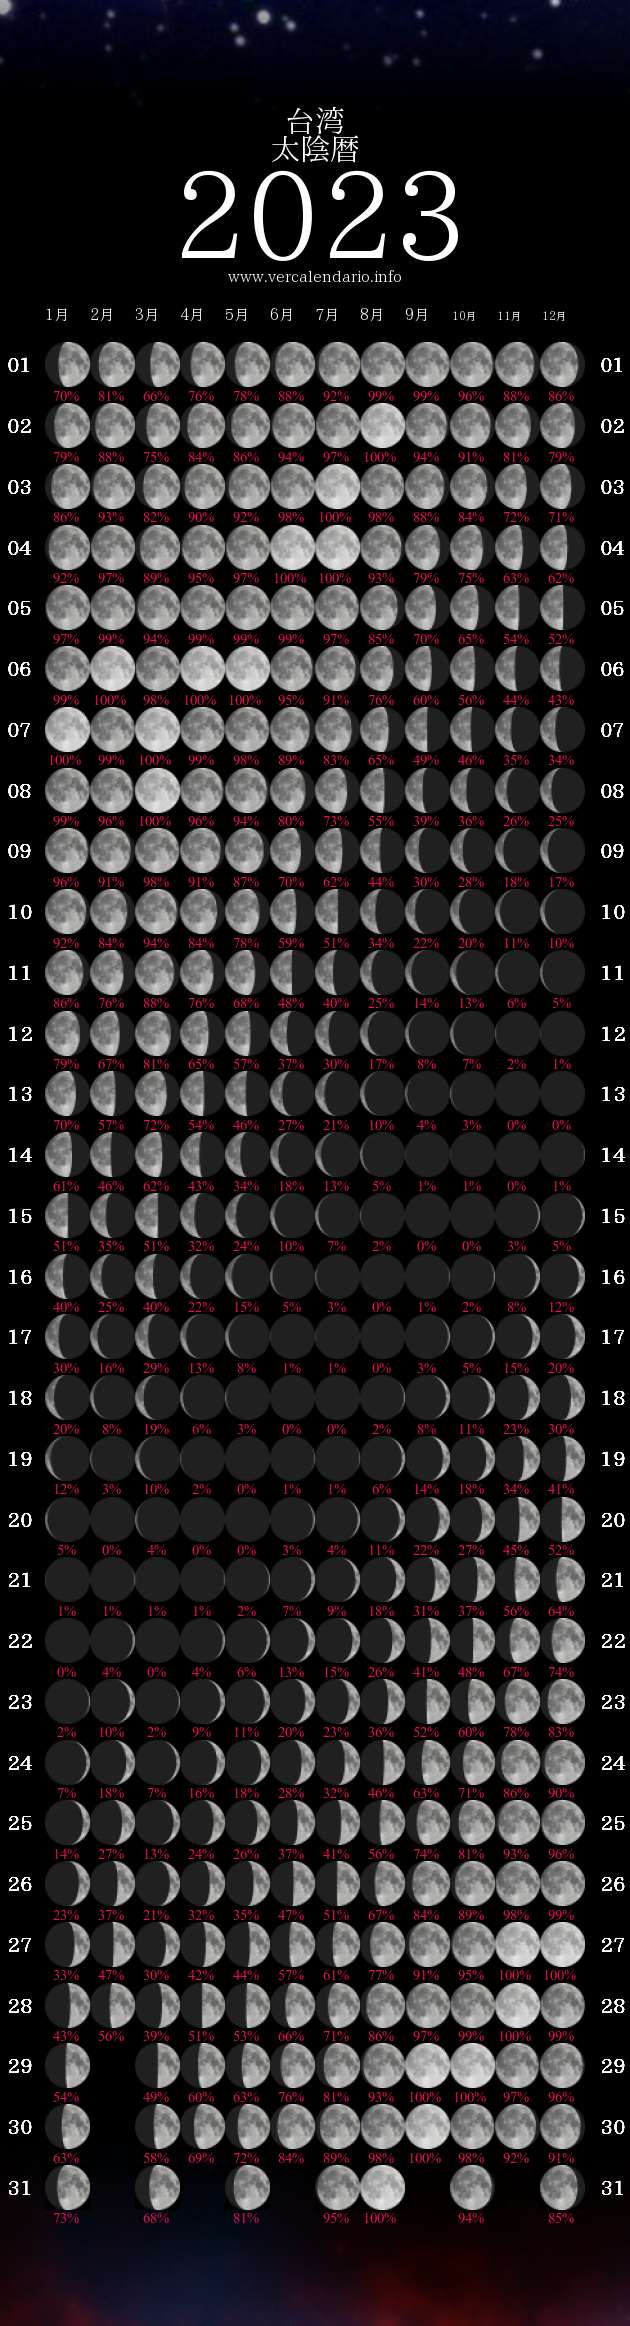 2023-full-moon-calendar-printable-printable-blank-world